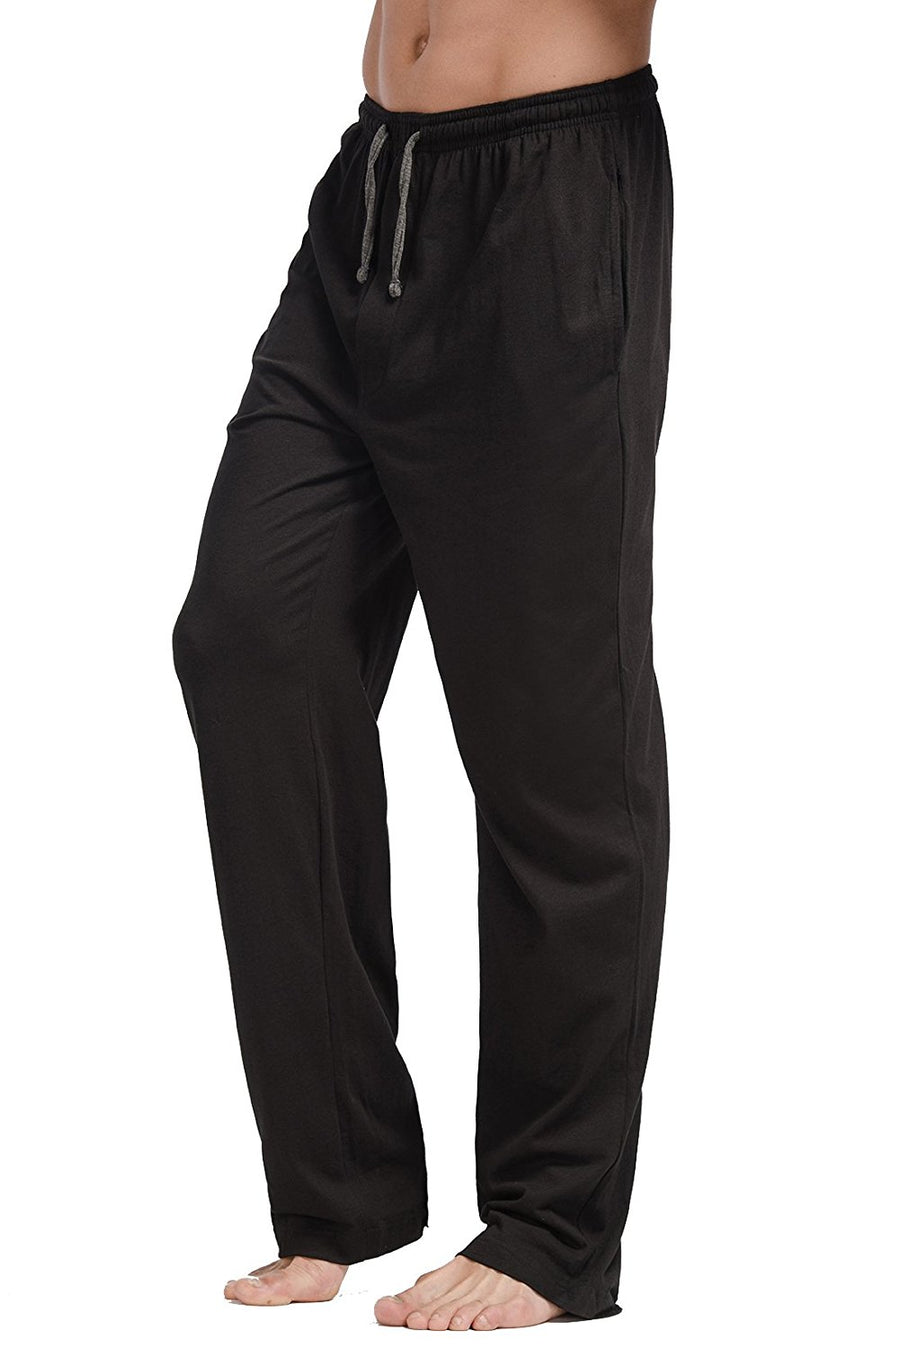 CYZ Men's 100% Cotton Jersey Knit Pajama Pants/Lounge Pants With Draws ...